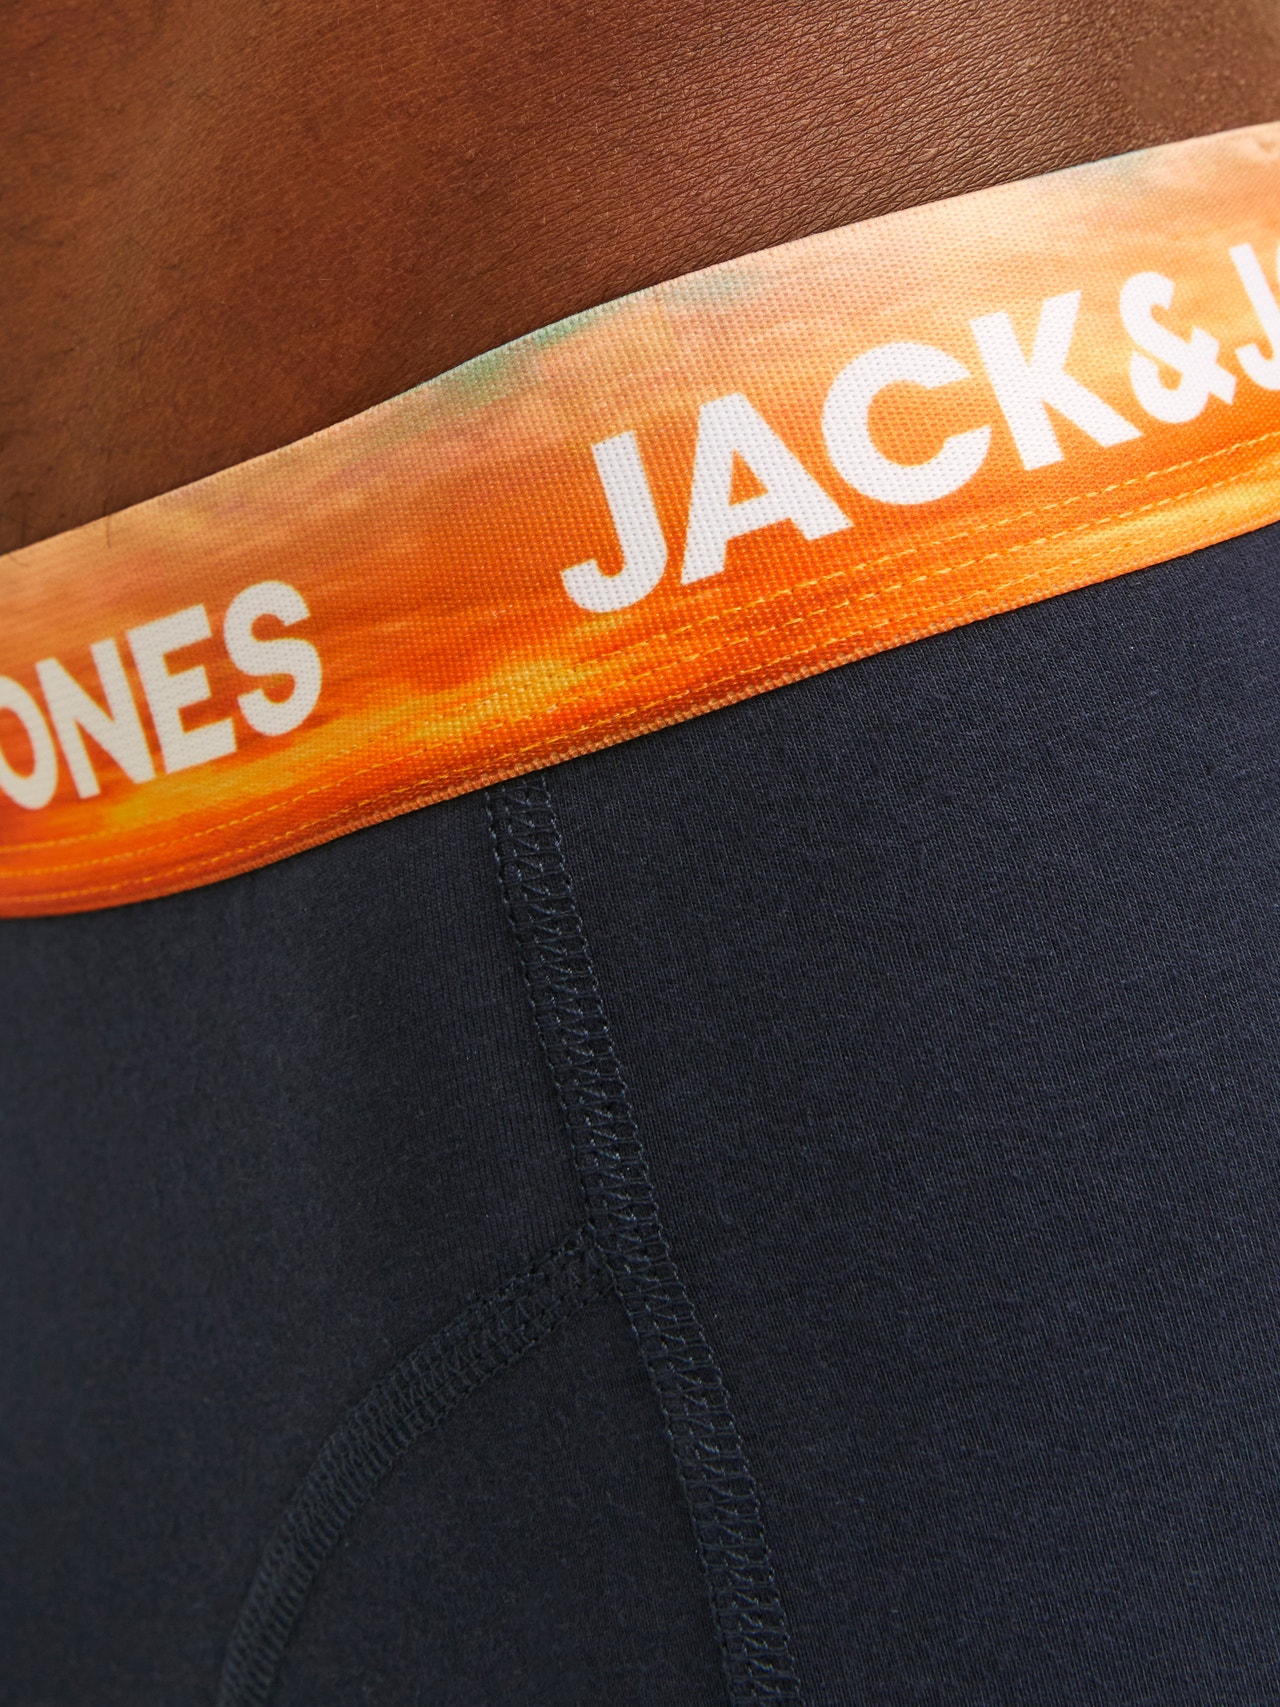 Jack & Jones 3er-pack Boxershorts -Navy Blazer - 12255810